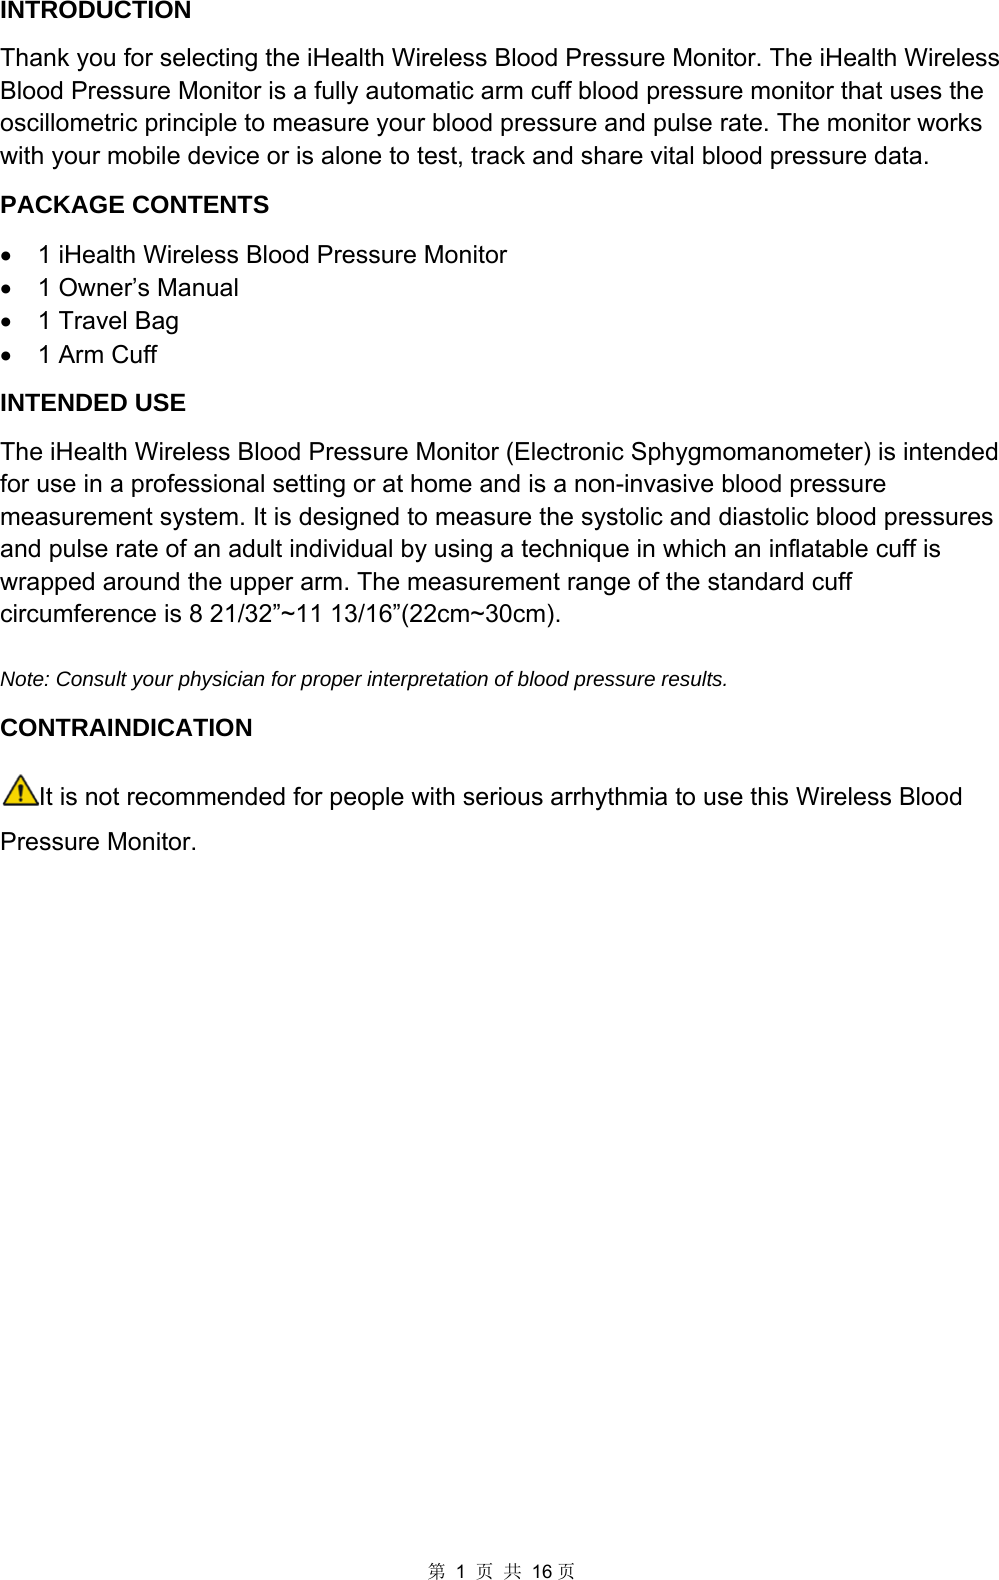 02-947 blood pressure manual user list